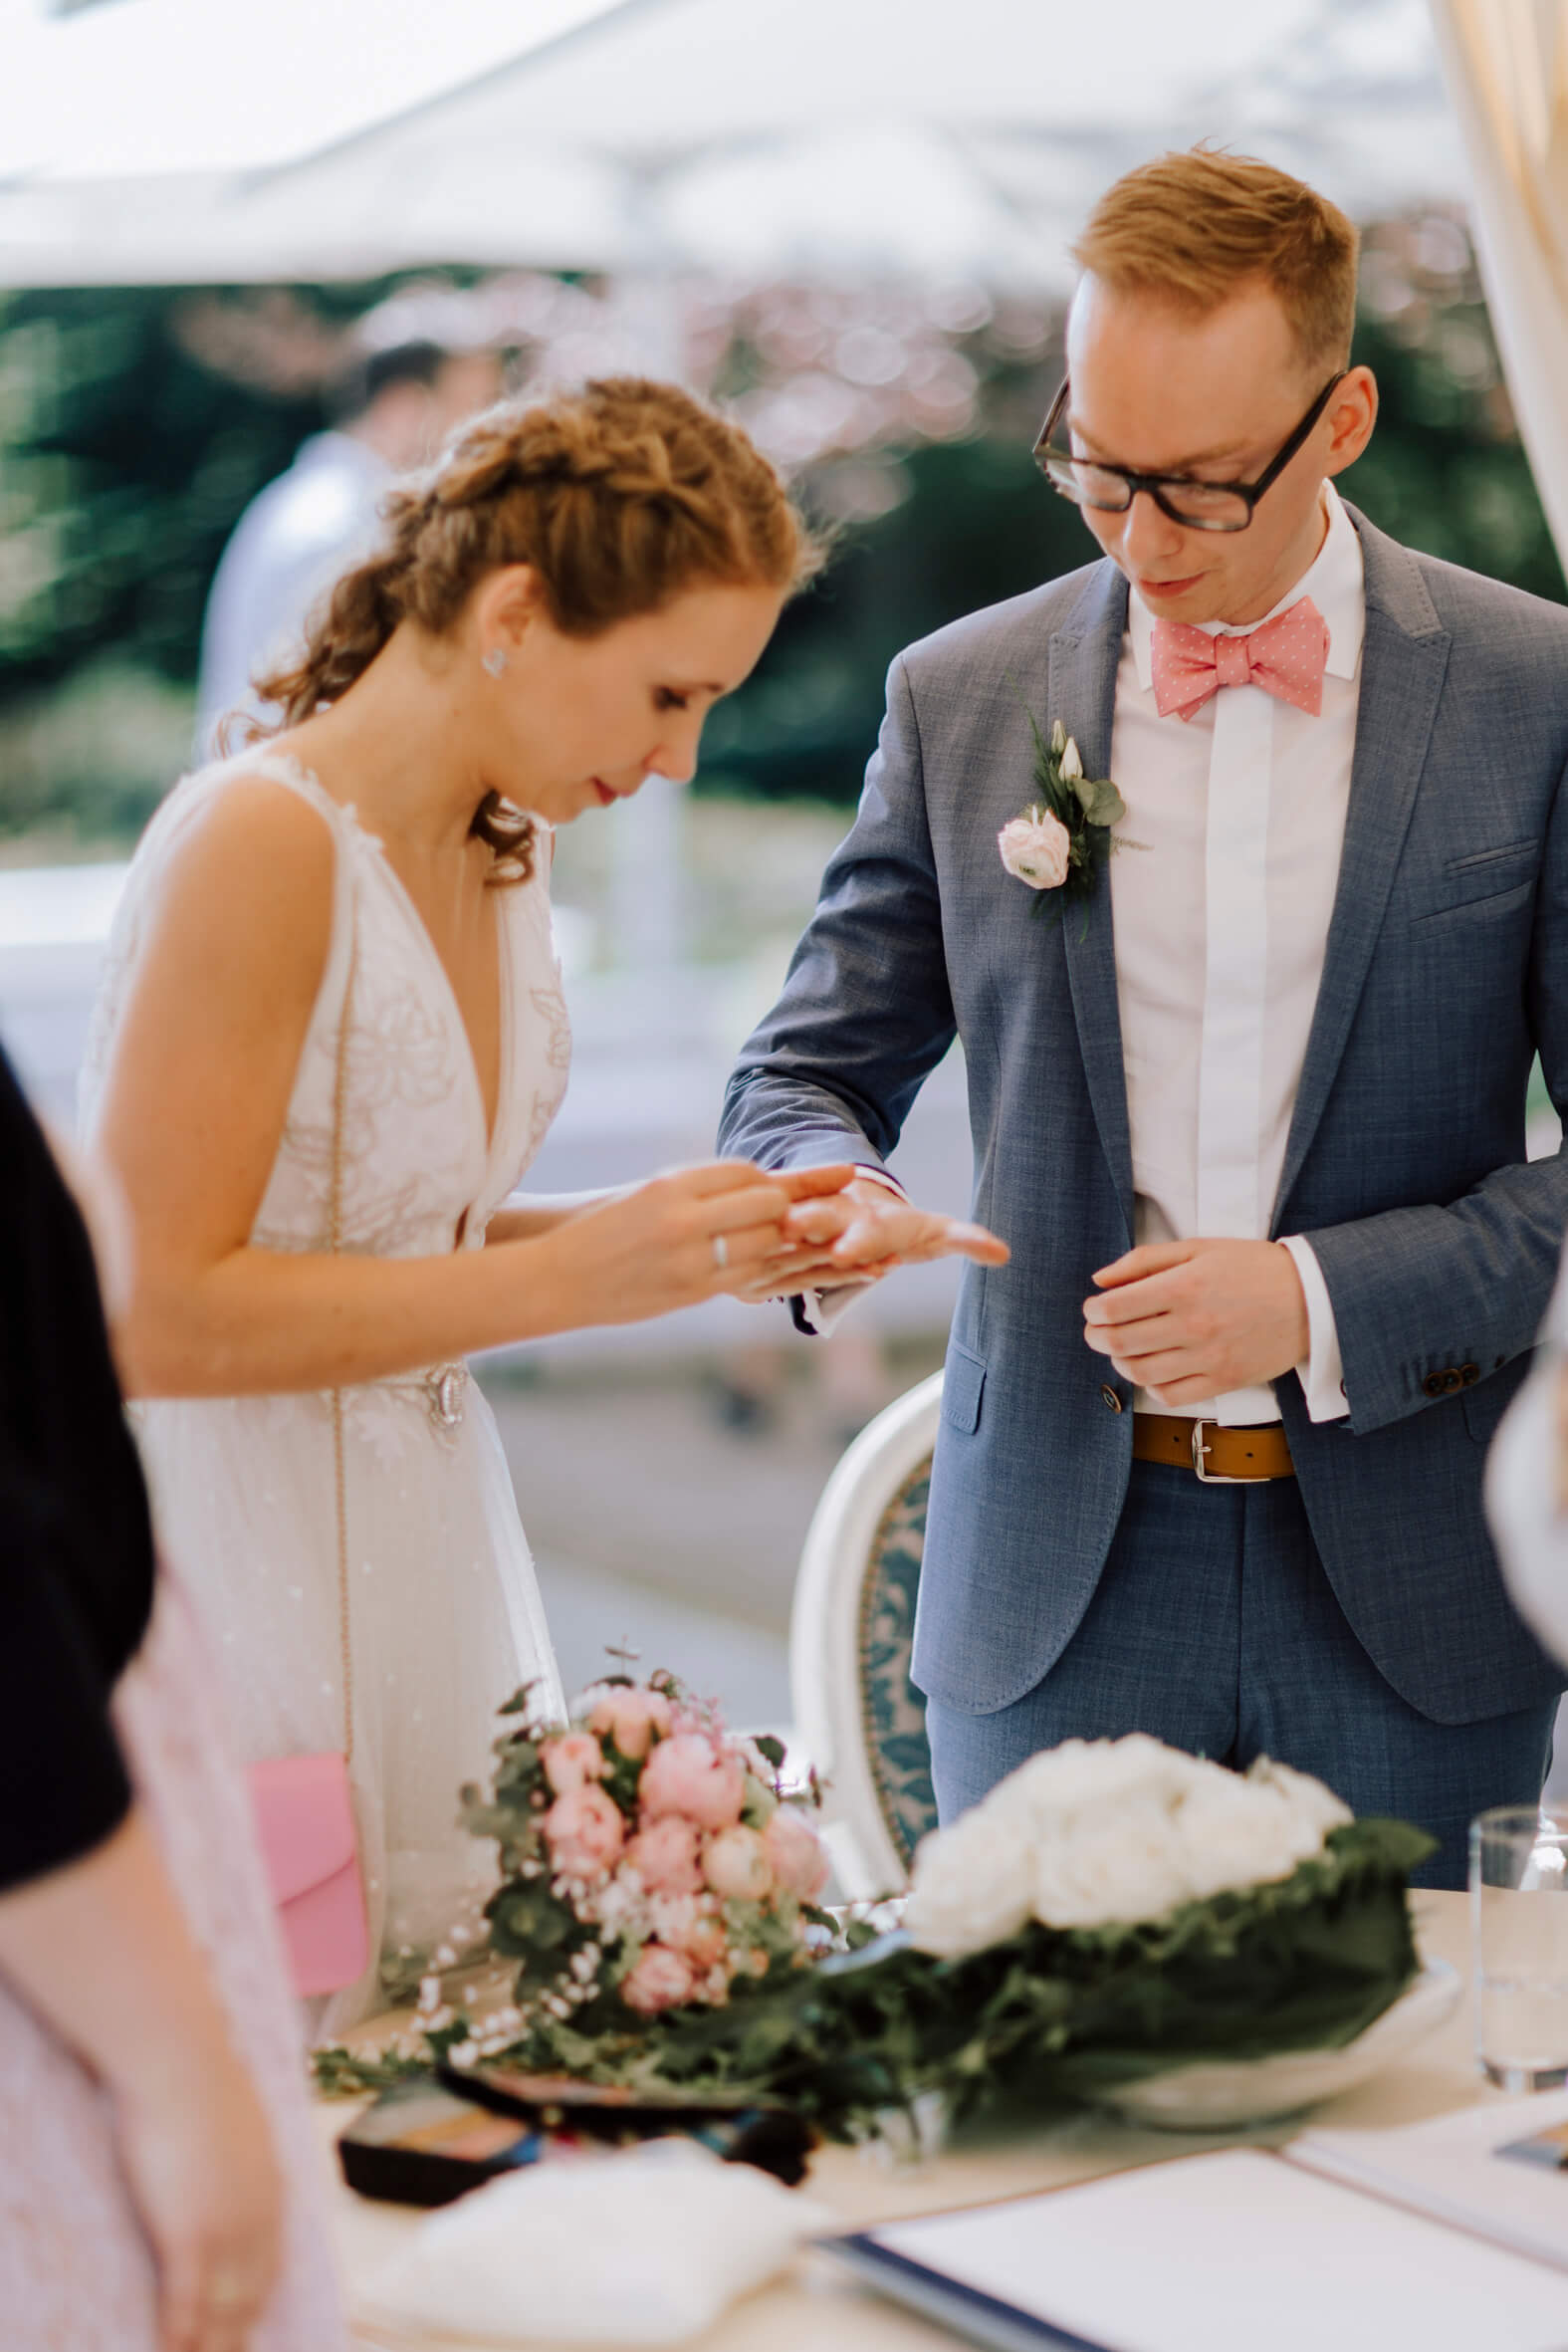 Wedding-Update-The-Wedding-Ceremony-Kationette-Fashionblogger-Lifestyleblogger-NRW-Wedding2018